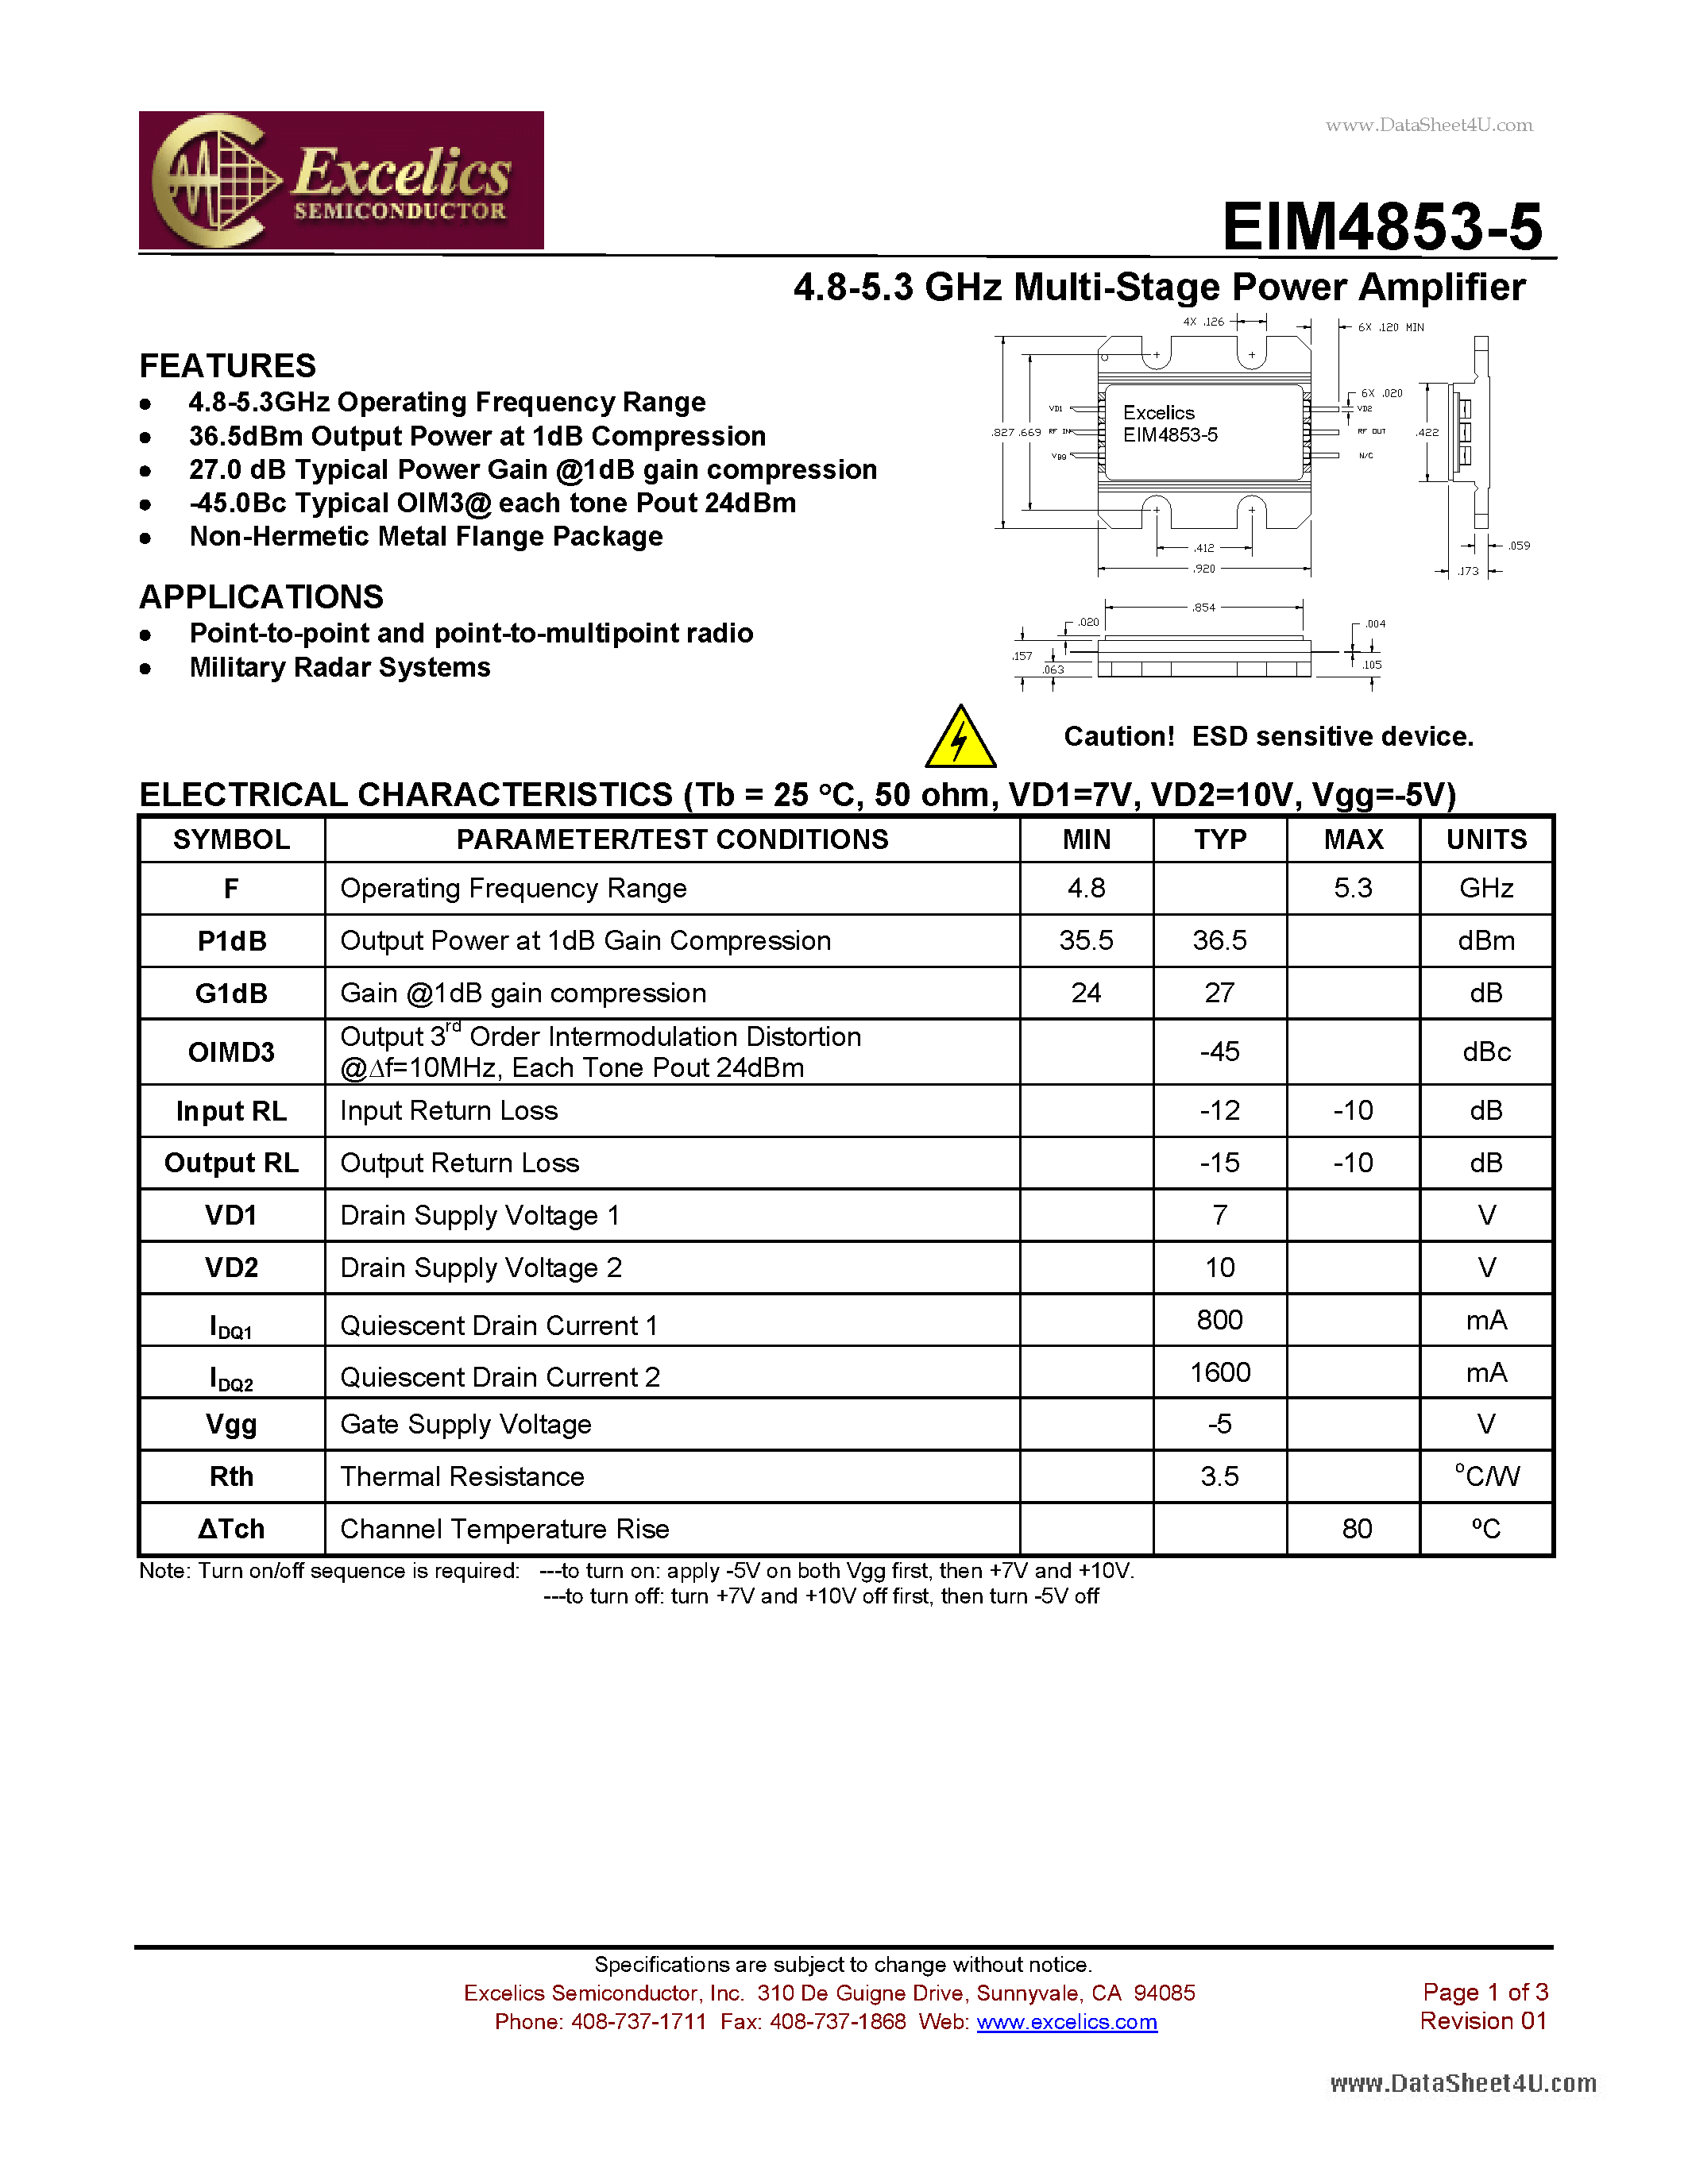 Даташит EIM4853-5 - 4.8-5.3 GHz Multi-Stage Power Amplifier страница 1